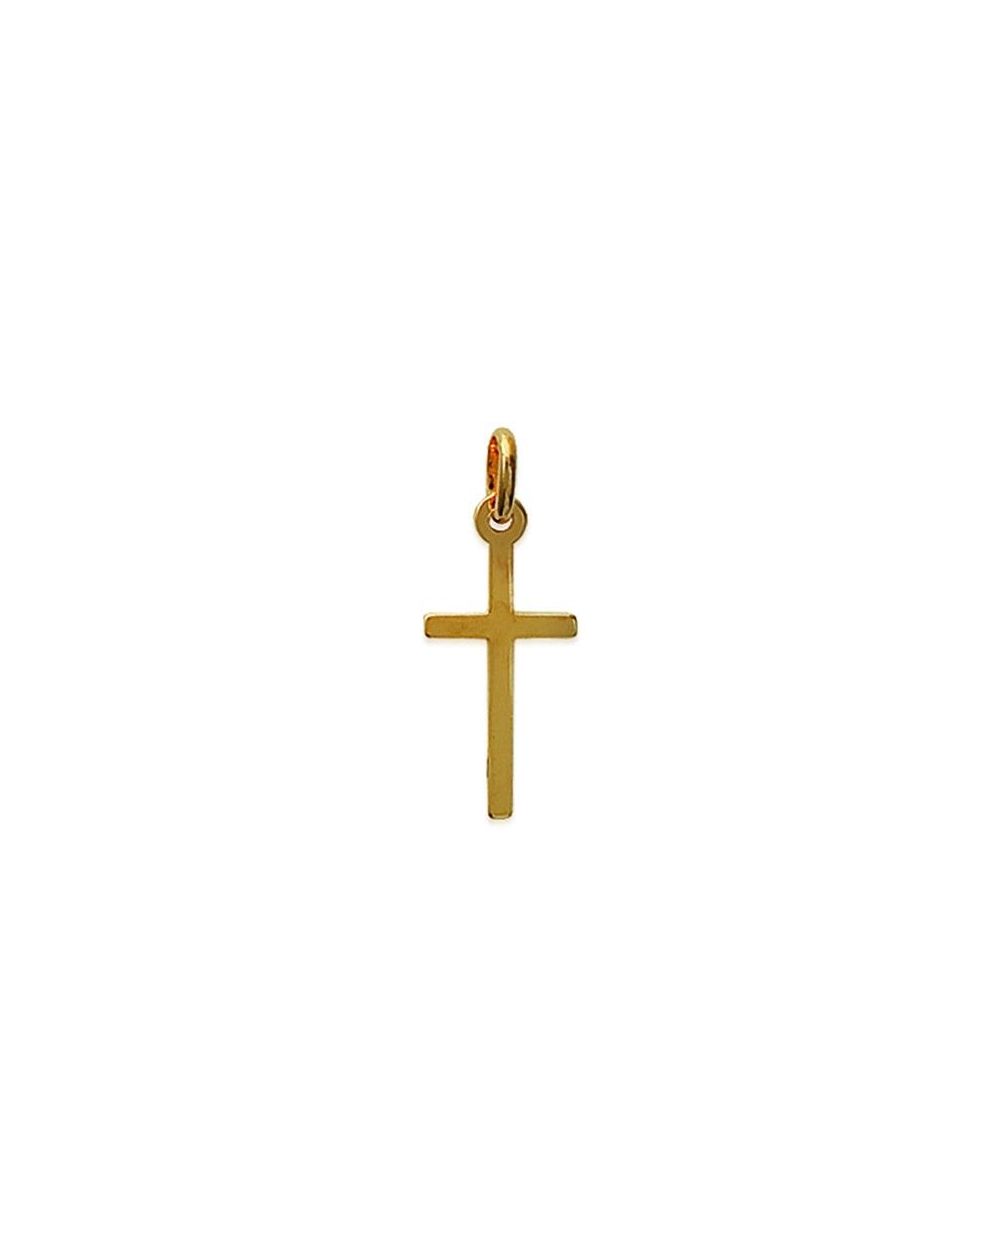 Pendentif Croix dorée - Bijoux en argent 925 - Pendentif